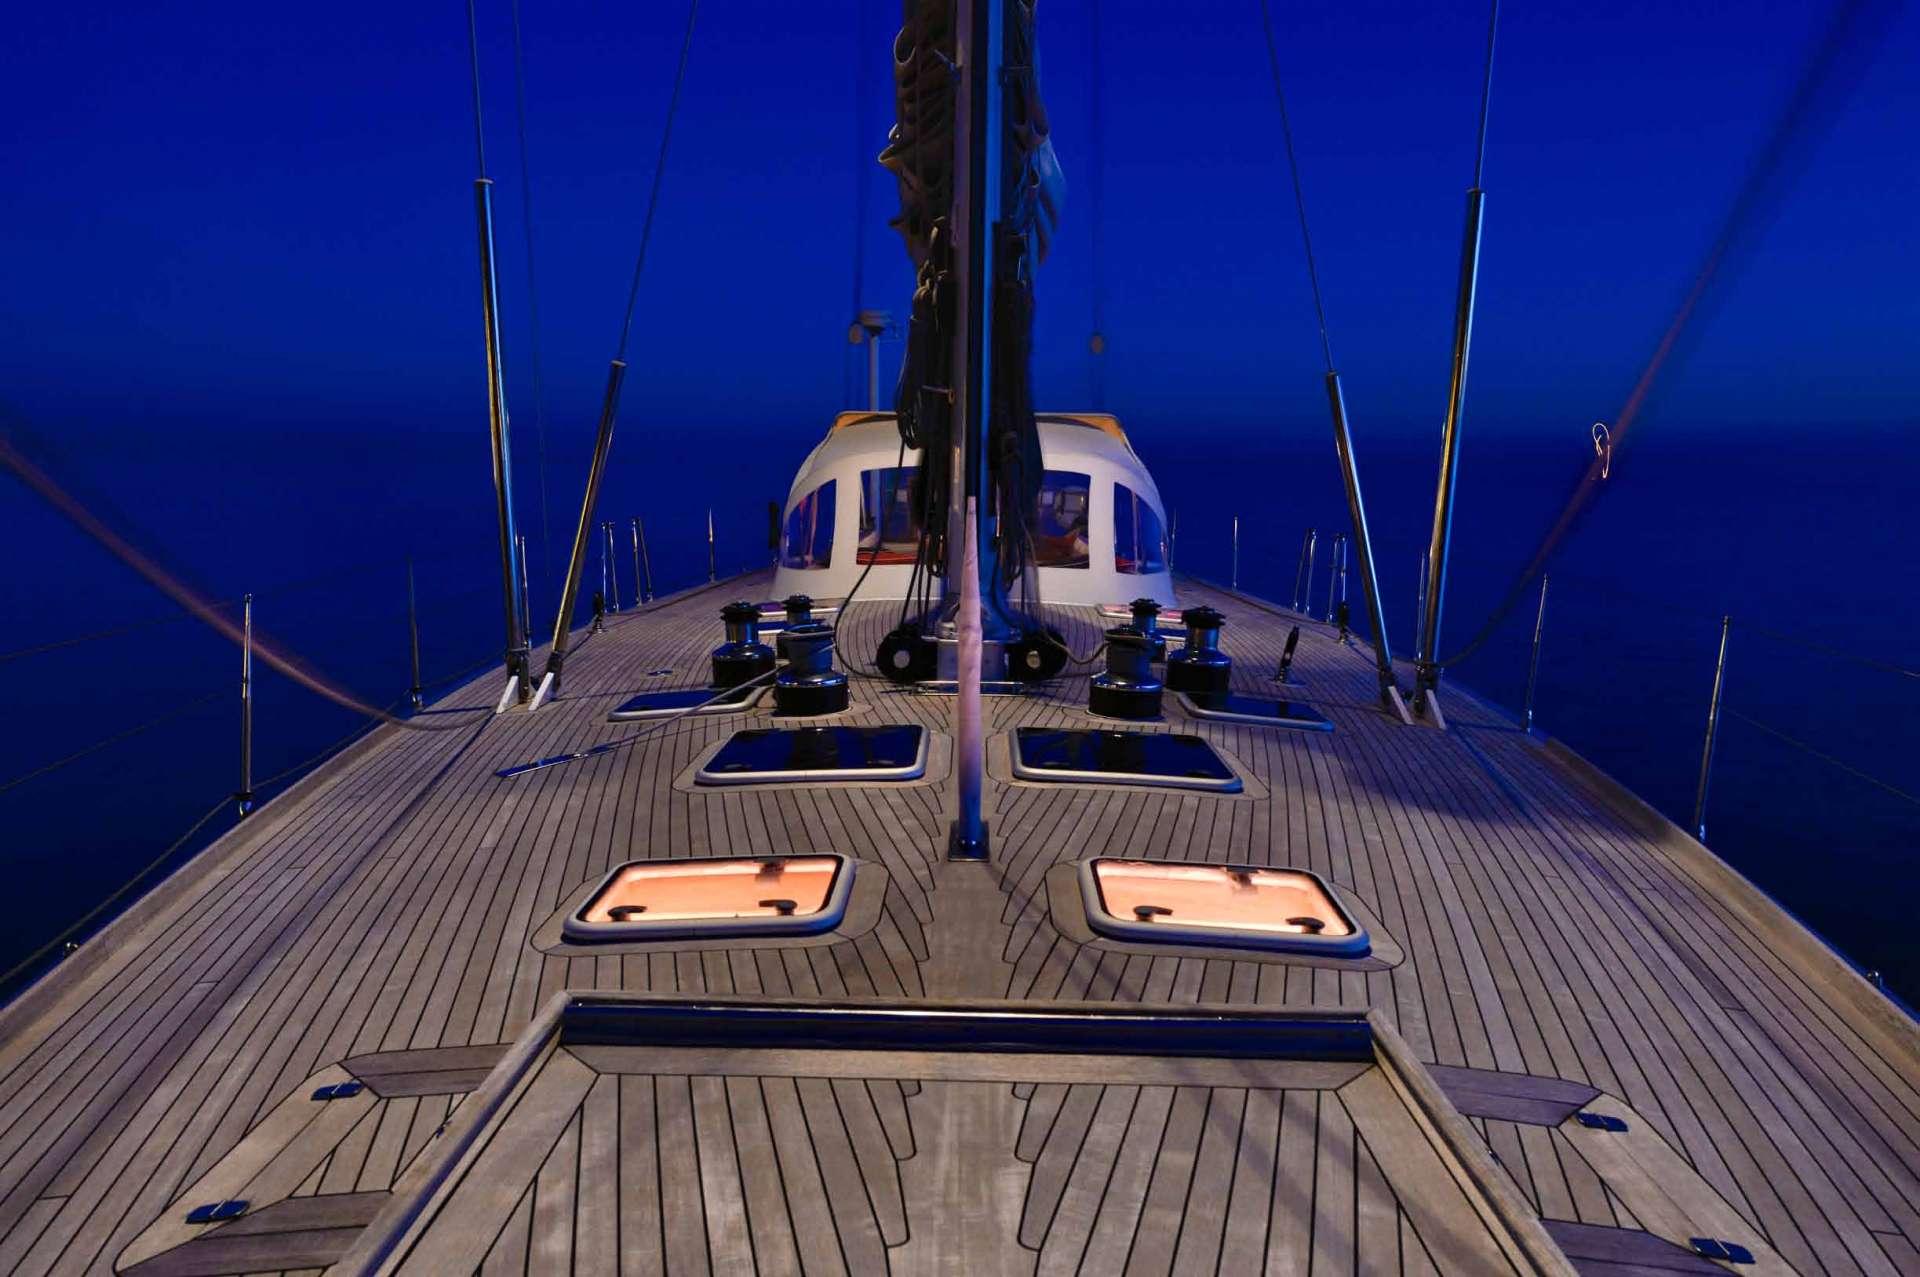 tess - Yacht Charter Poltu Quatu & Boat hire in Riviera, Cors, Sard, Italy, Spain, Turkey, Croatia, Greece 5